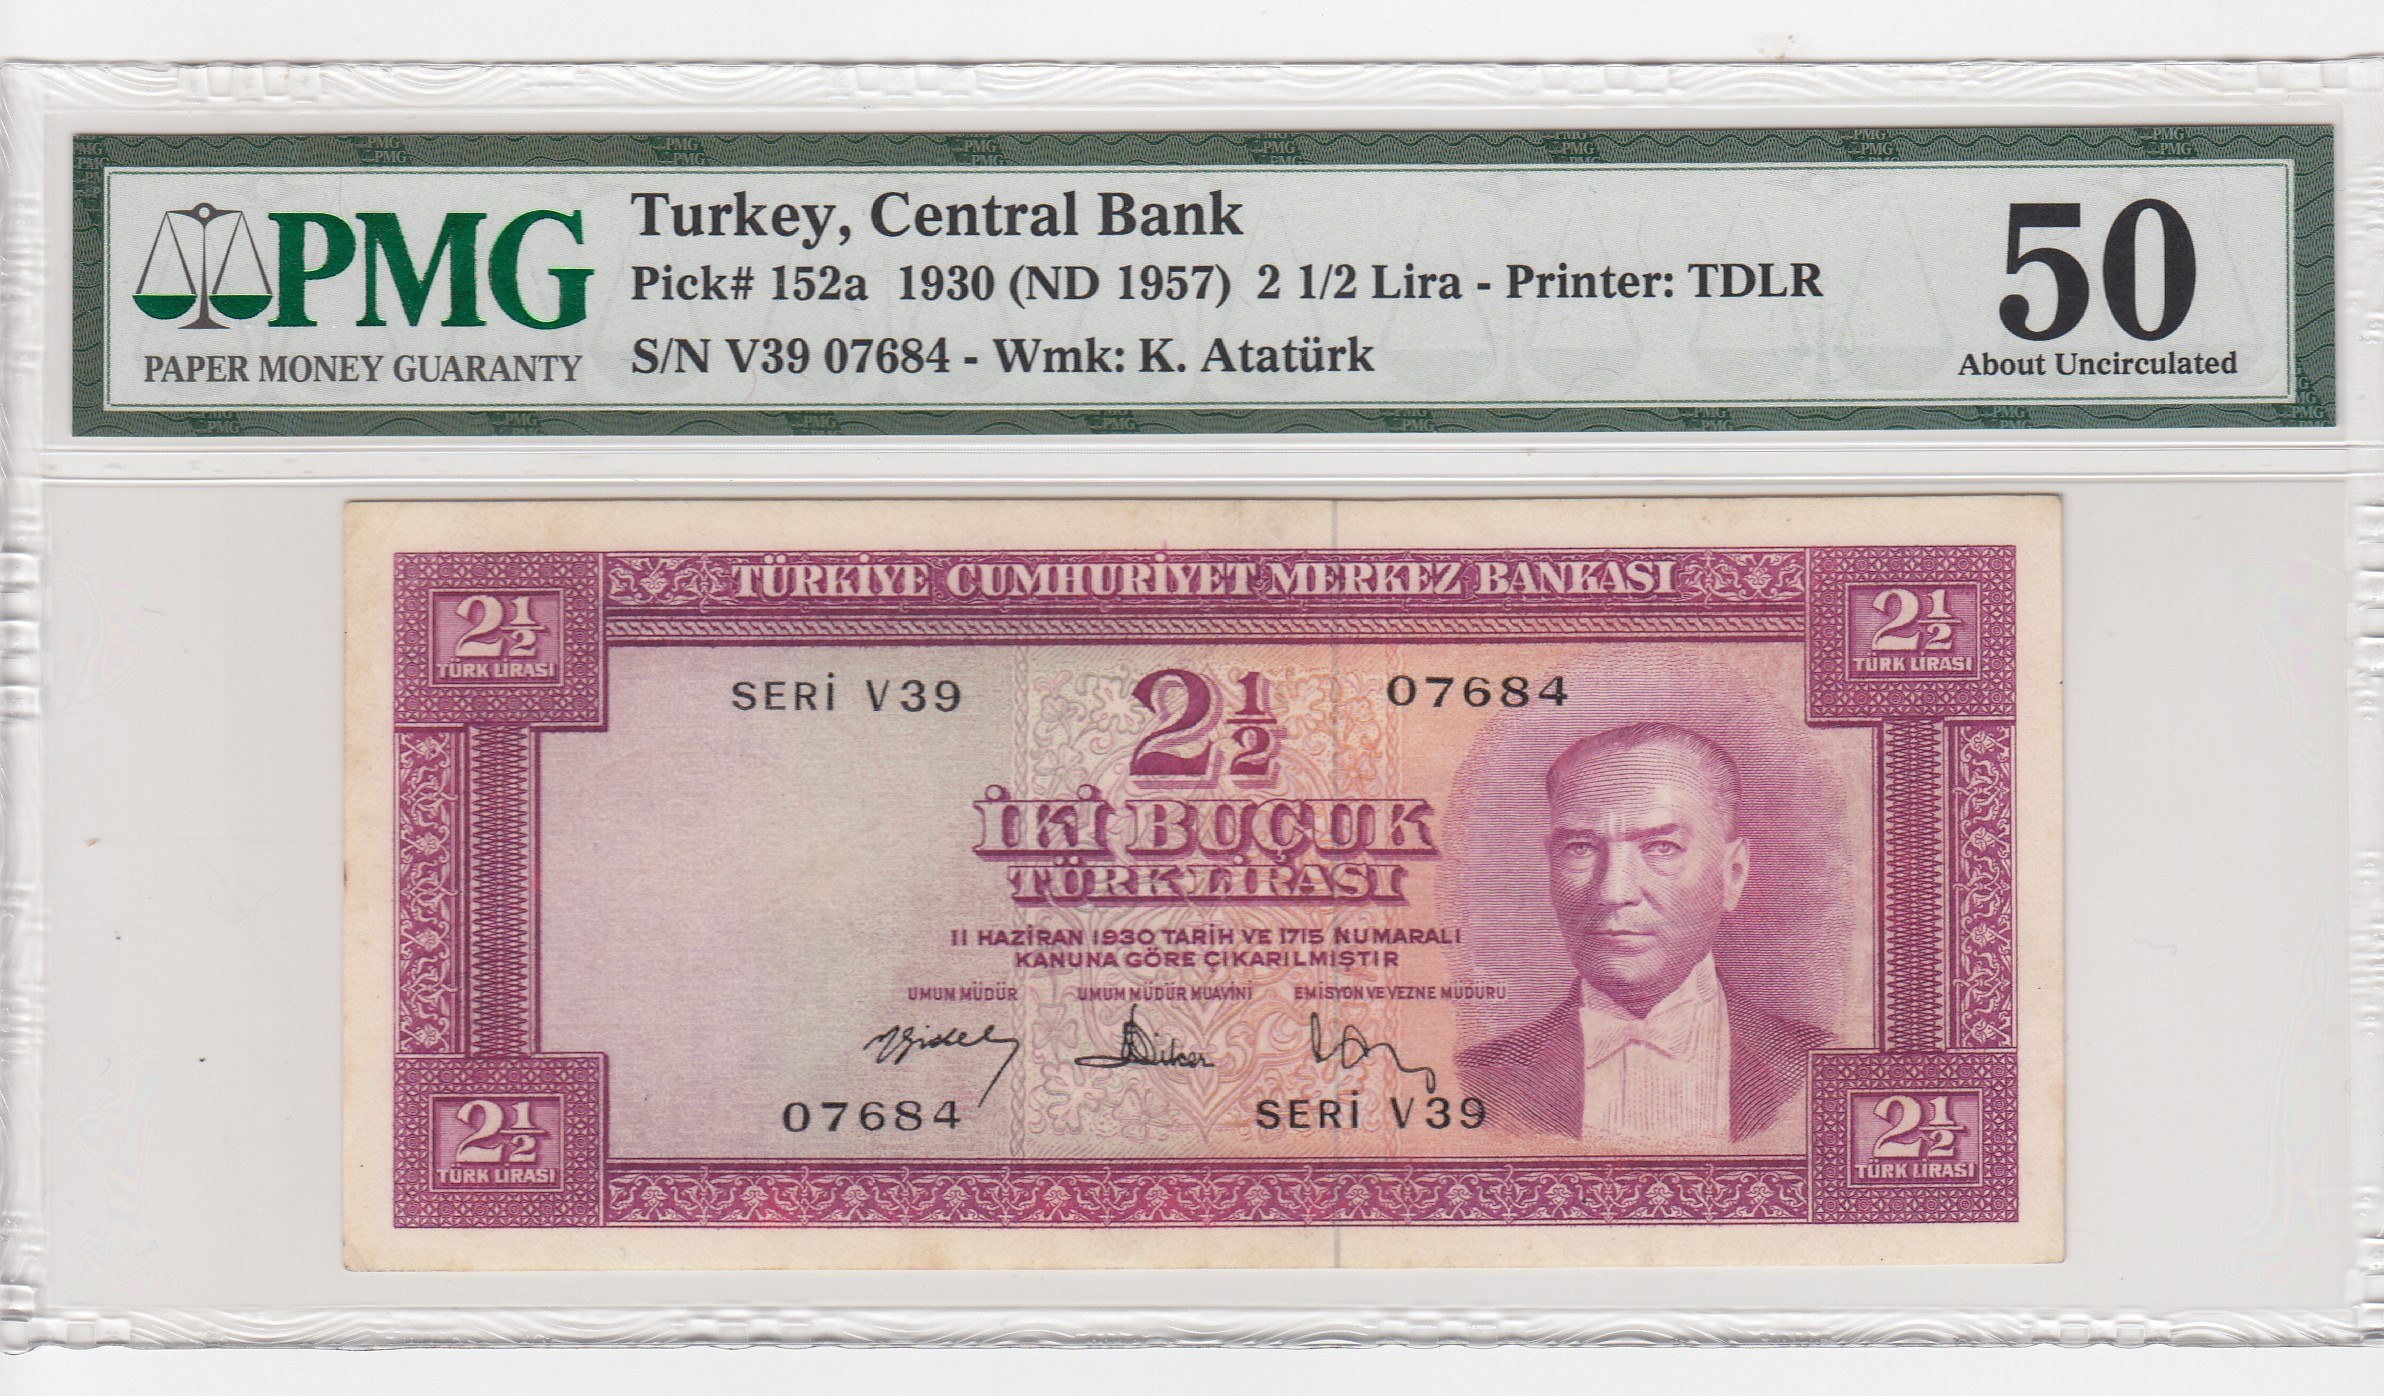 Es tl. 1 / 100 Лиры. Турция банкнота 10 лир 1930 года фото. Central Bank of Turkey.